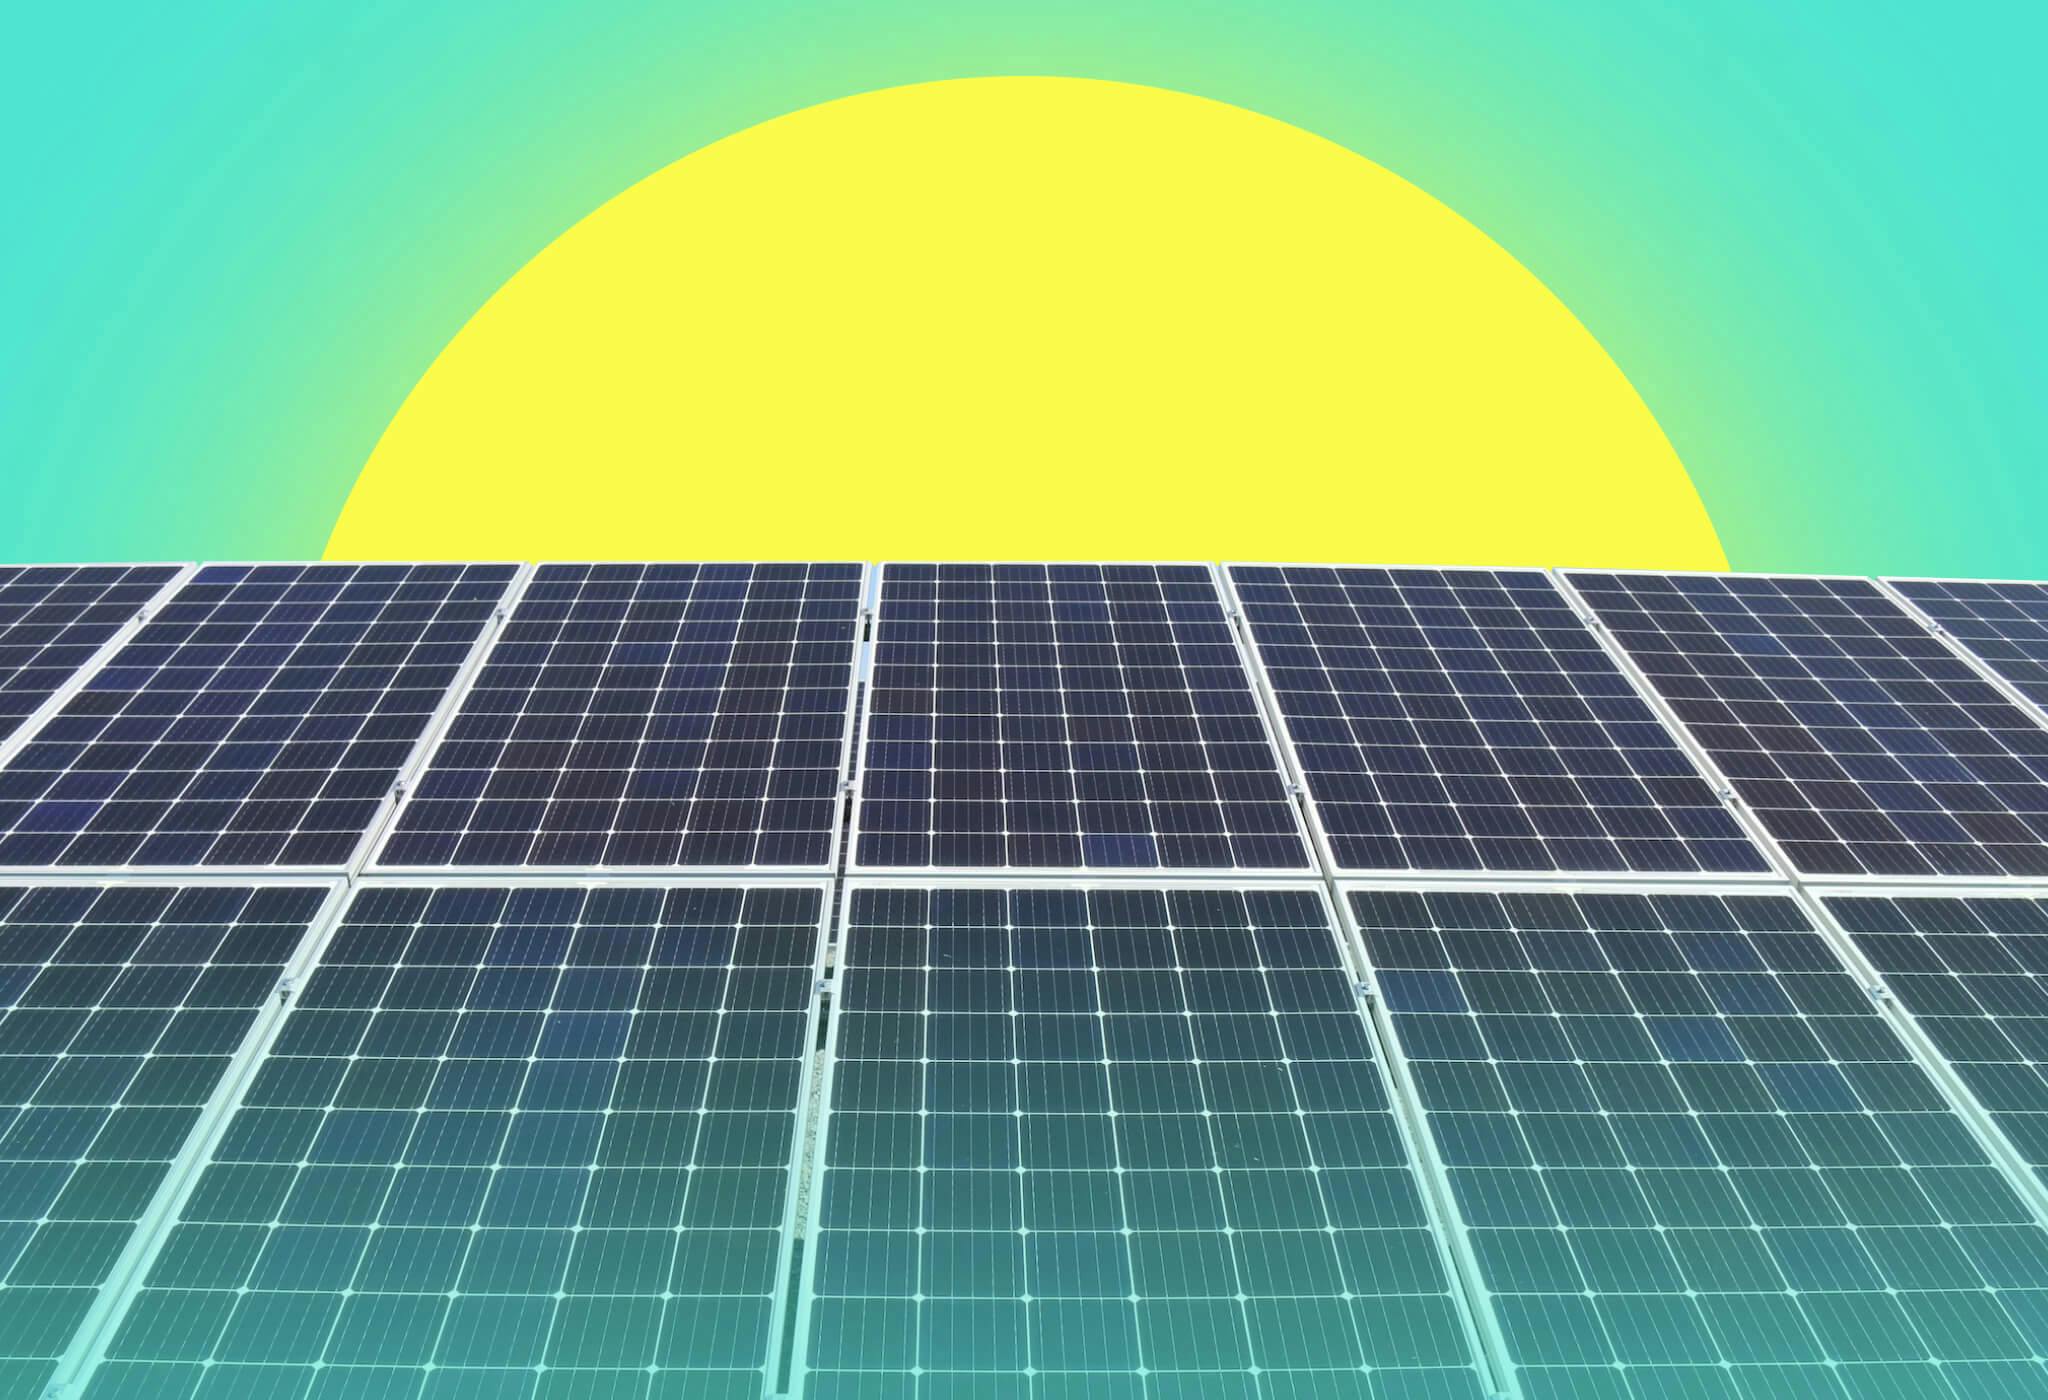 The sun rising behind an array of polycrystalline solar panels